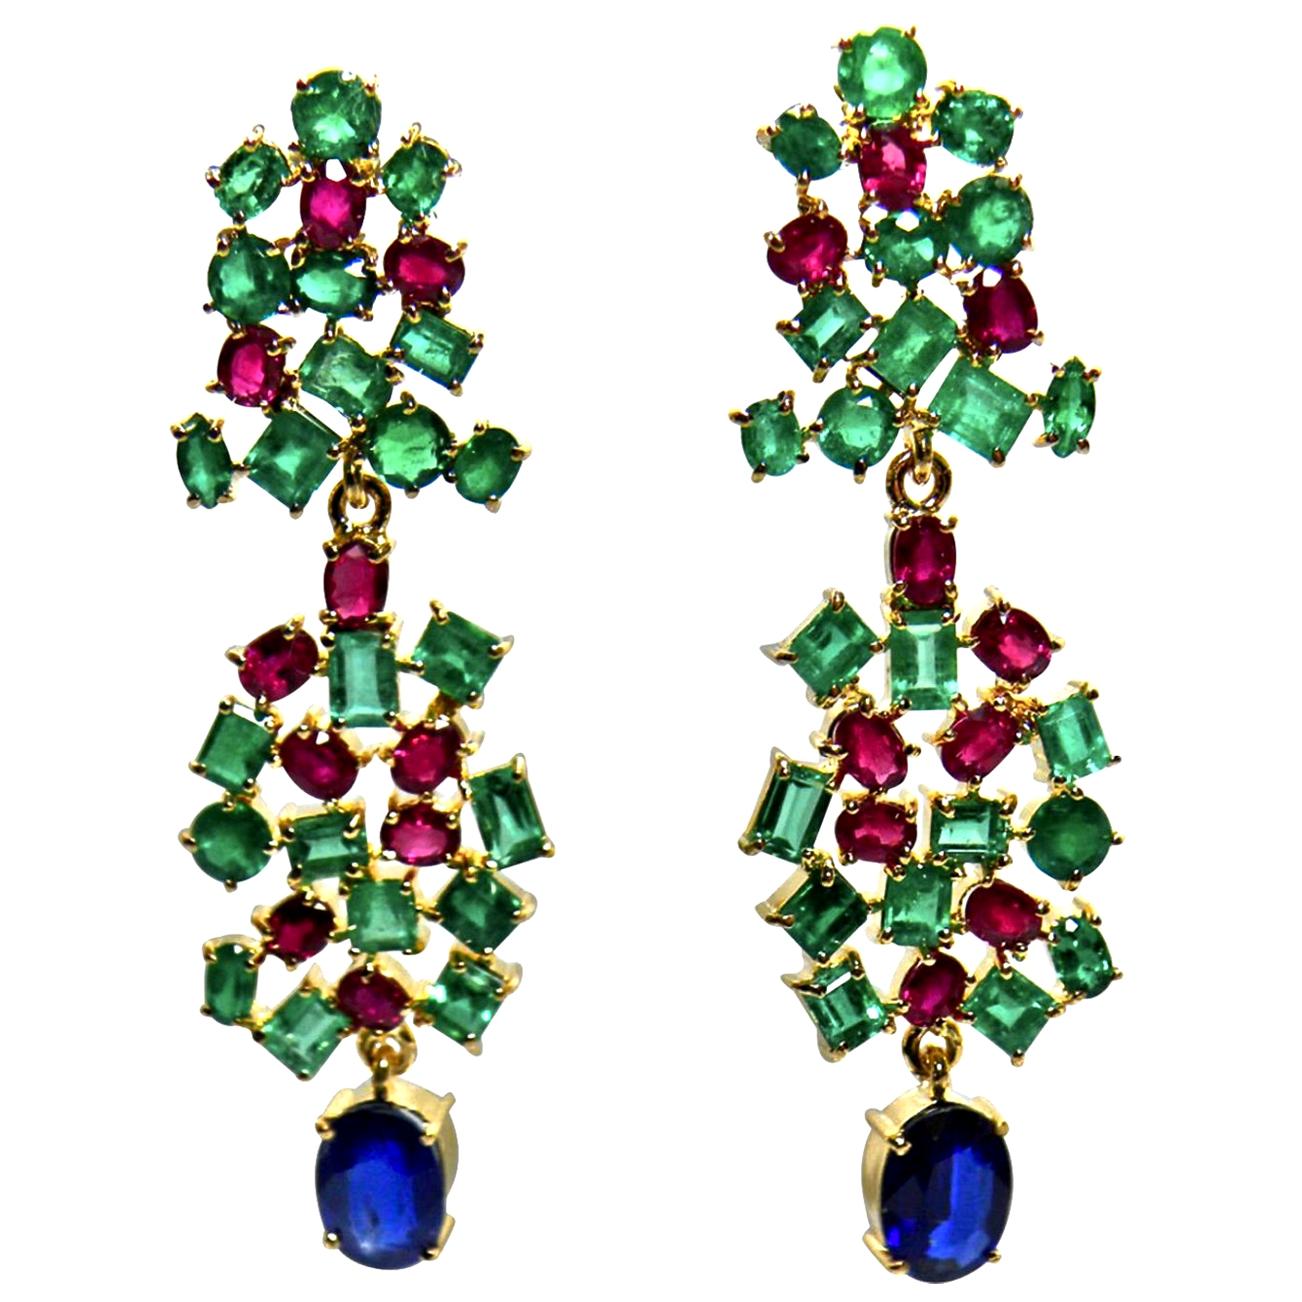  19.36 Carat Sapphire, Emerald, Ruby Chandeliers Earrings One of a Kind 